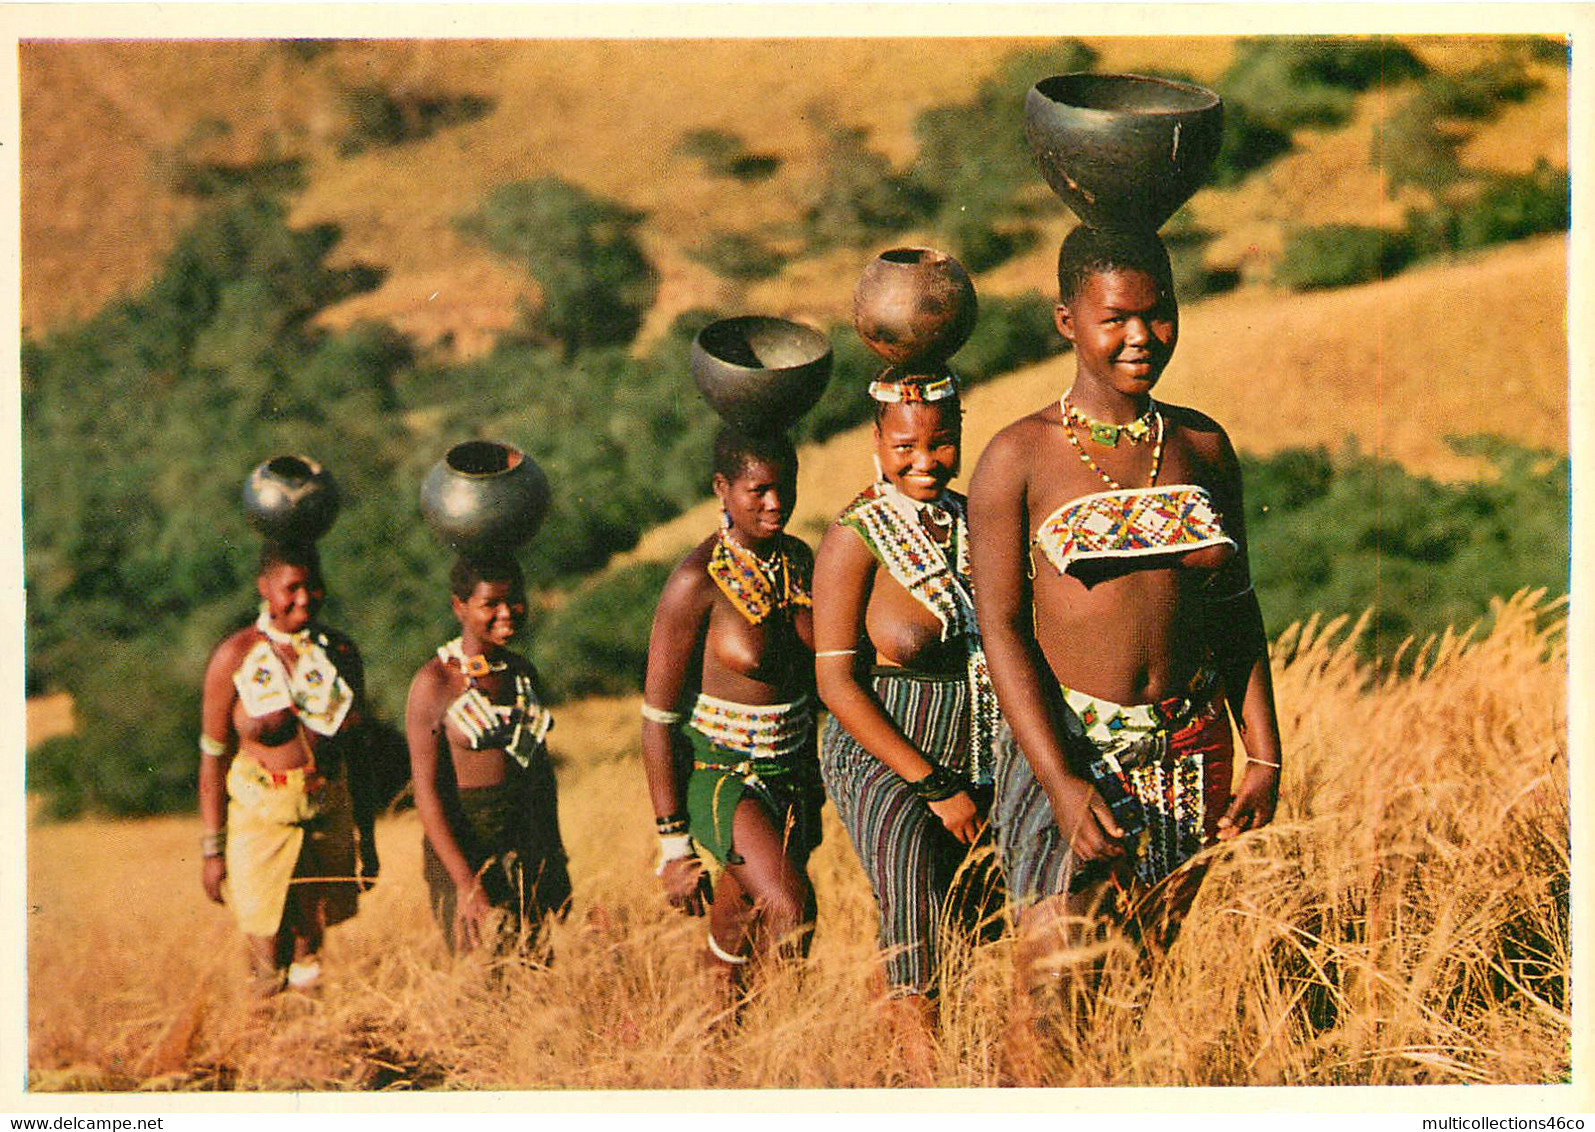 zulu girl